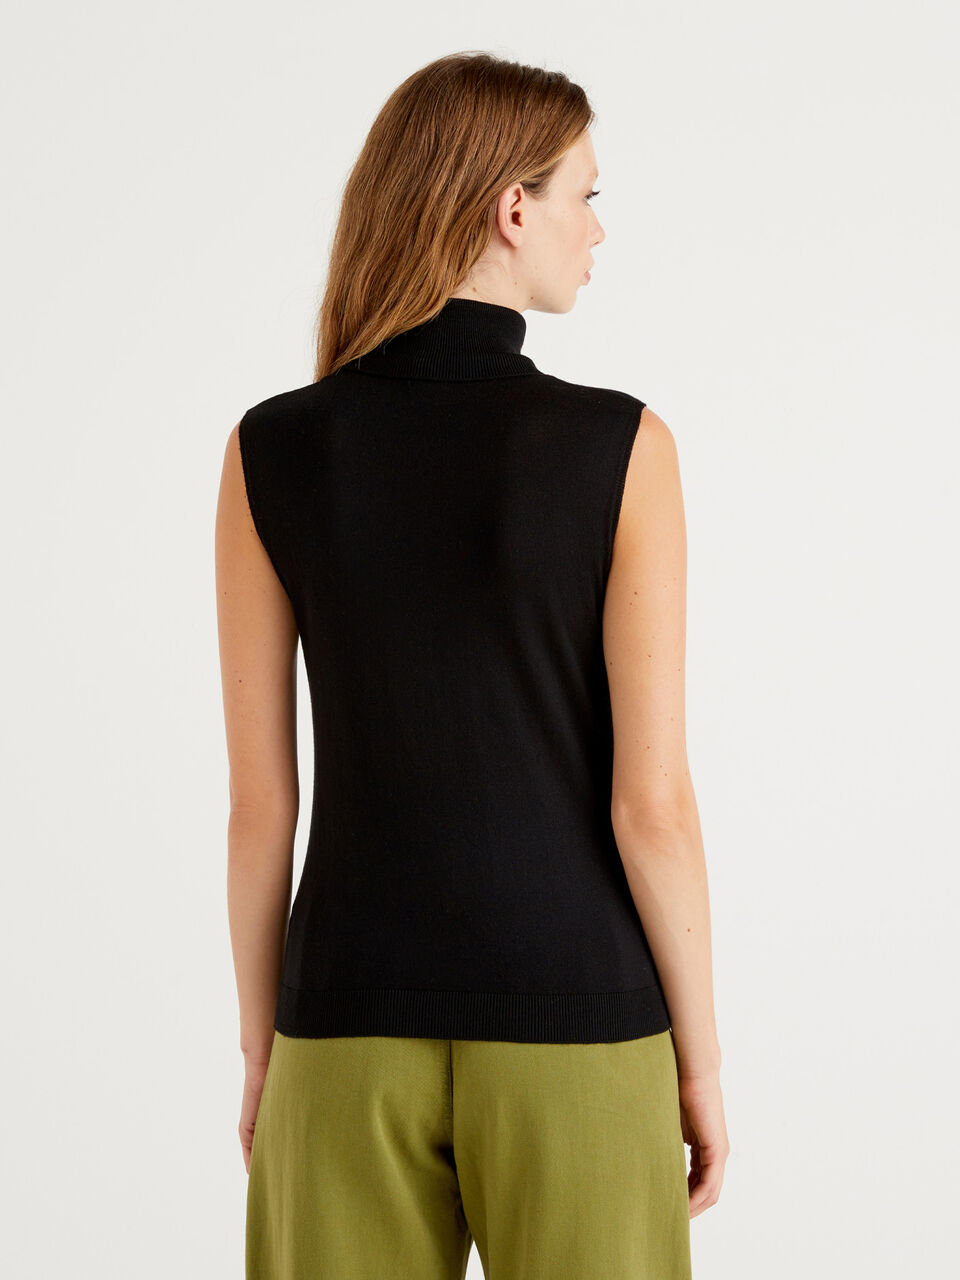 Sleeveless turtleneck in cashmere blend - Black